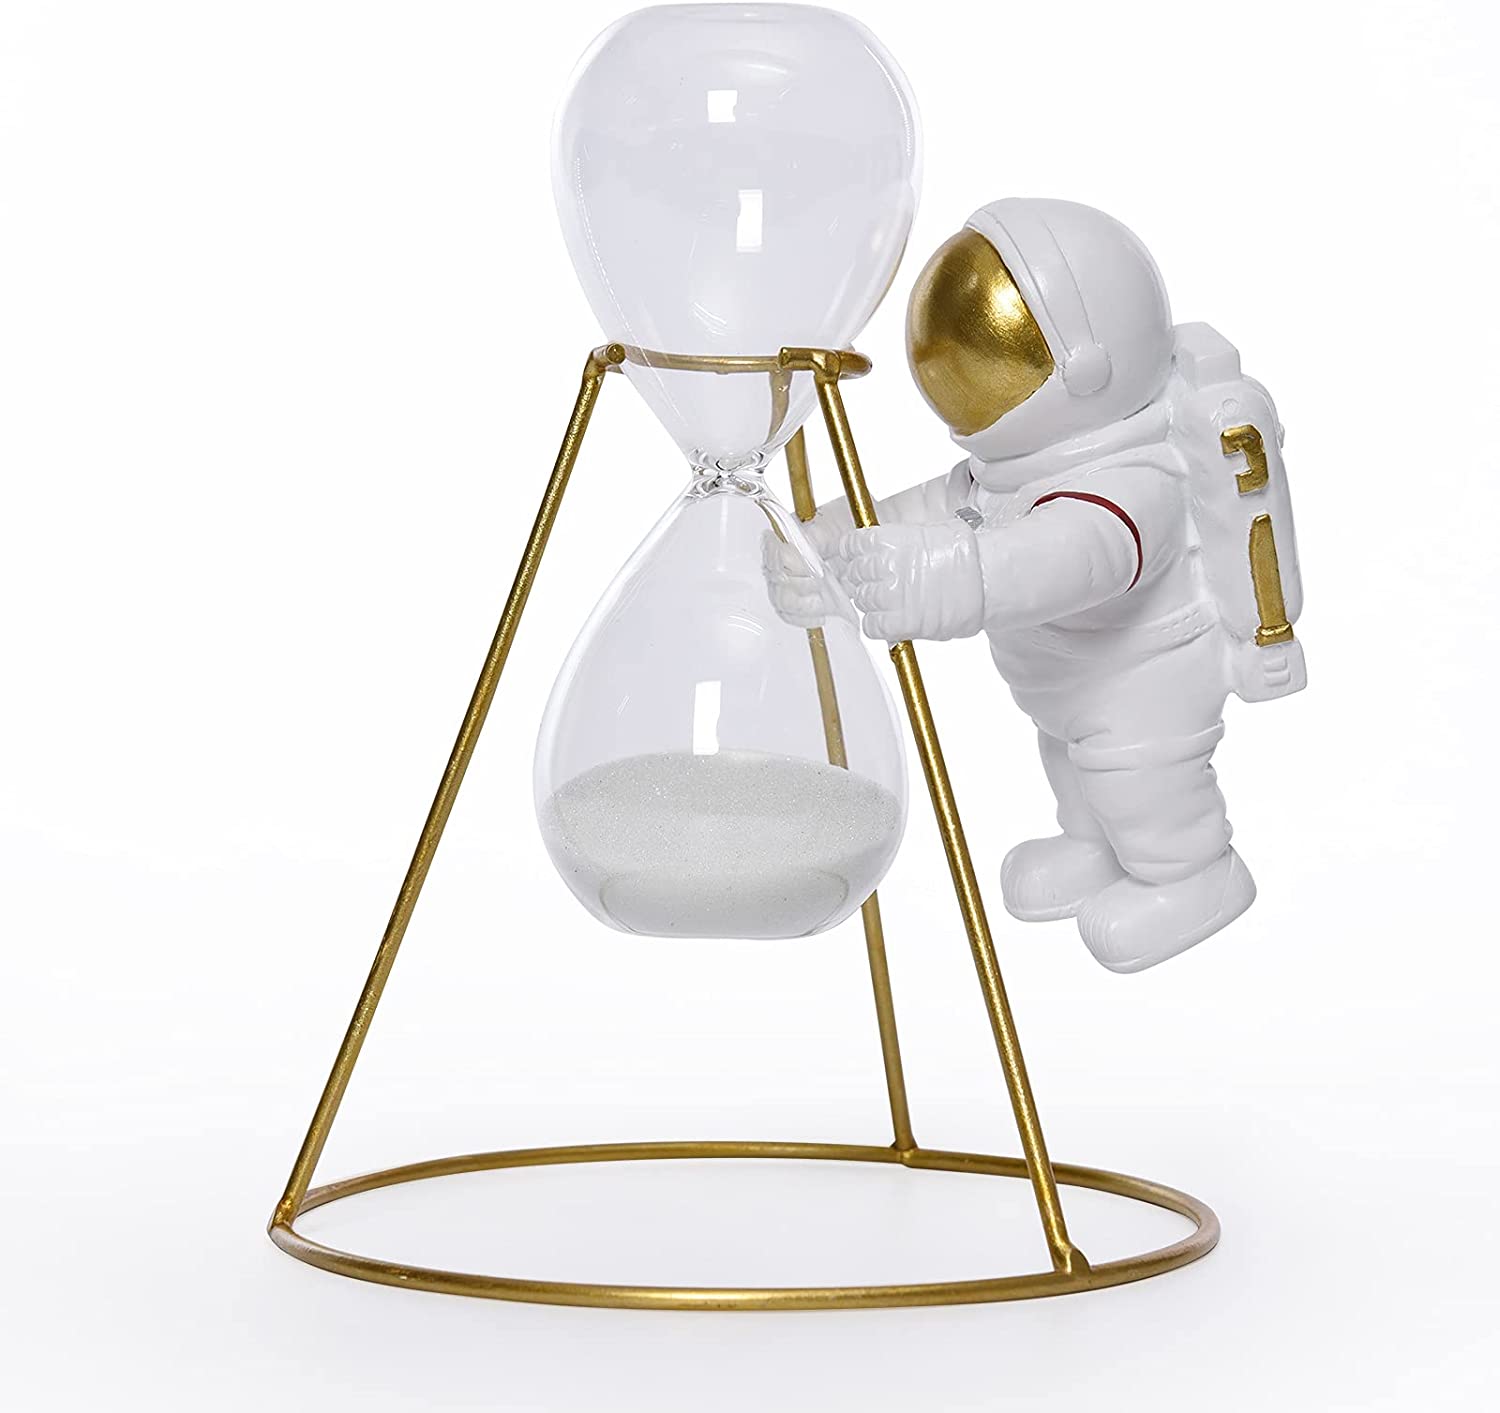 Decorative Astronaut Hourglass